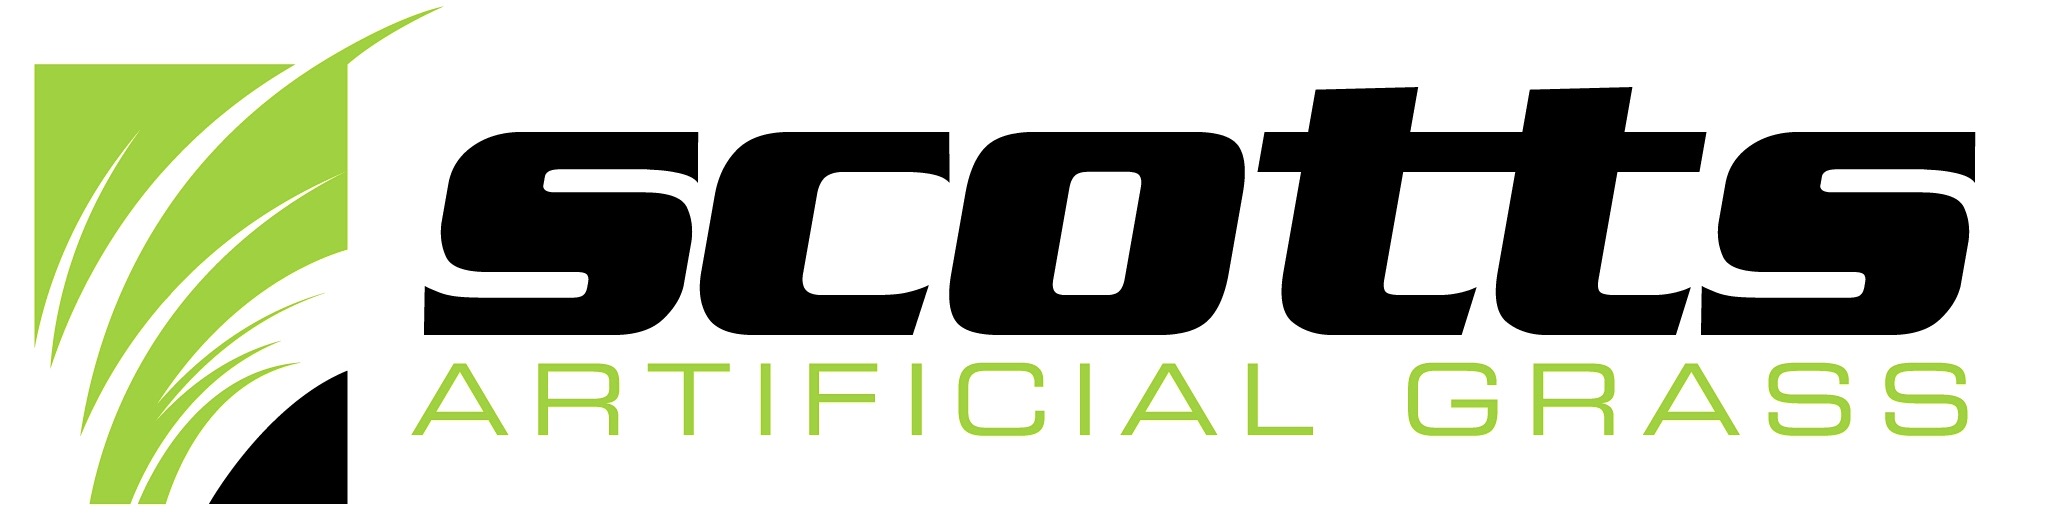 Scotts Artificial Grass, Inc. Logo